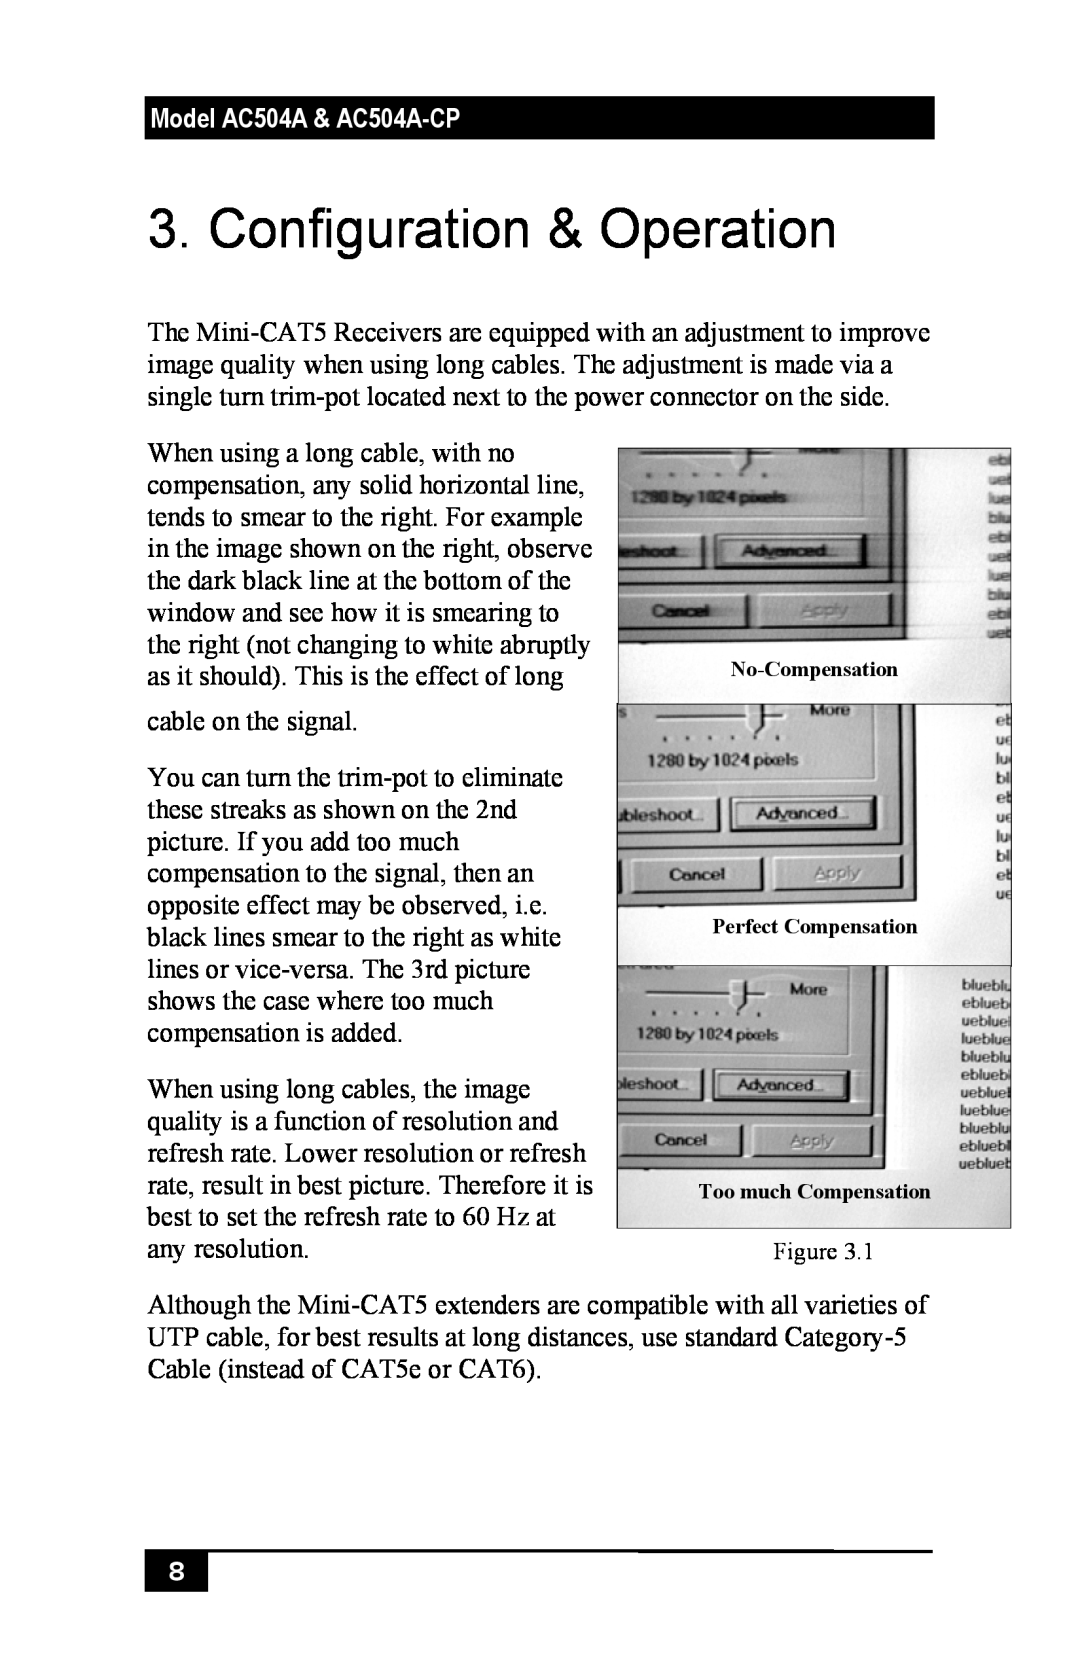 Black Box Mini-CAT5 Video-over-CAT5 Extension manual Configuration & Operation, Model AC504A & AC504A-CP 